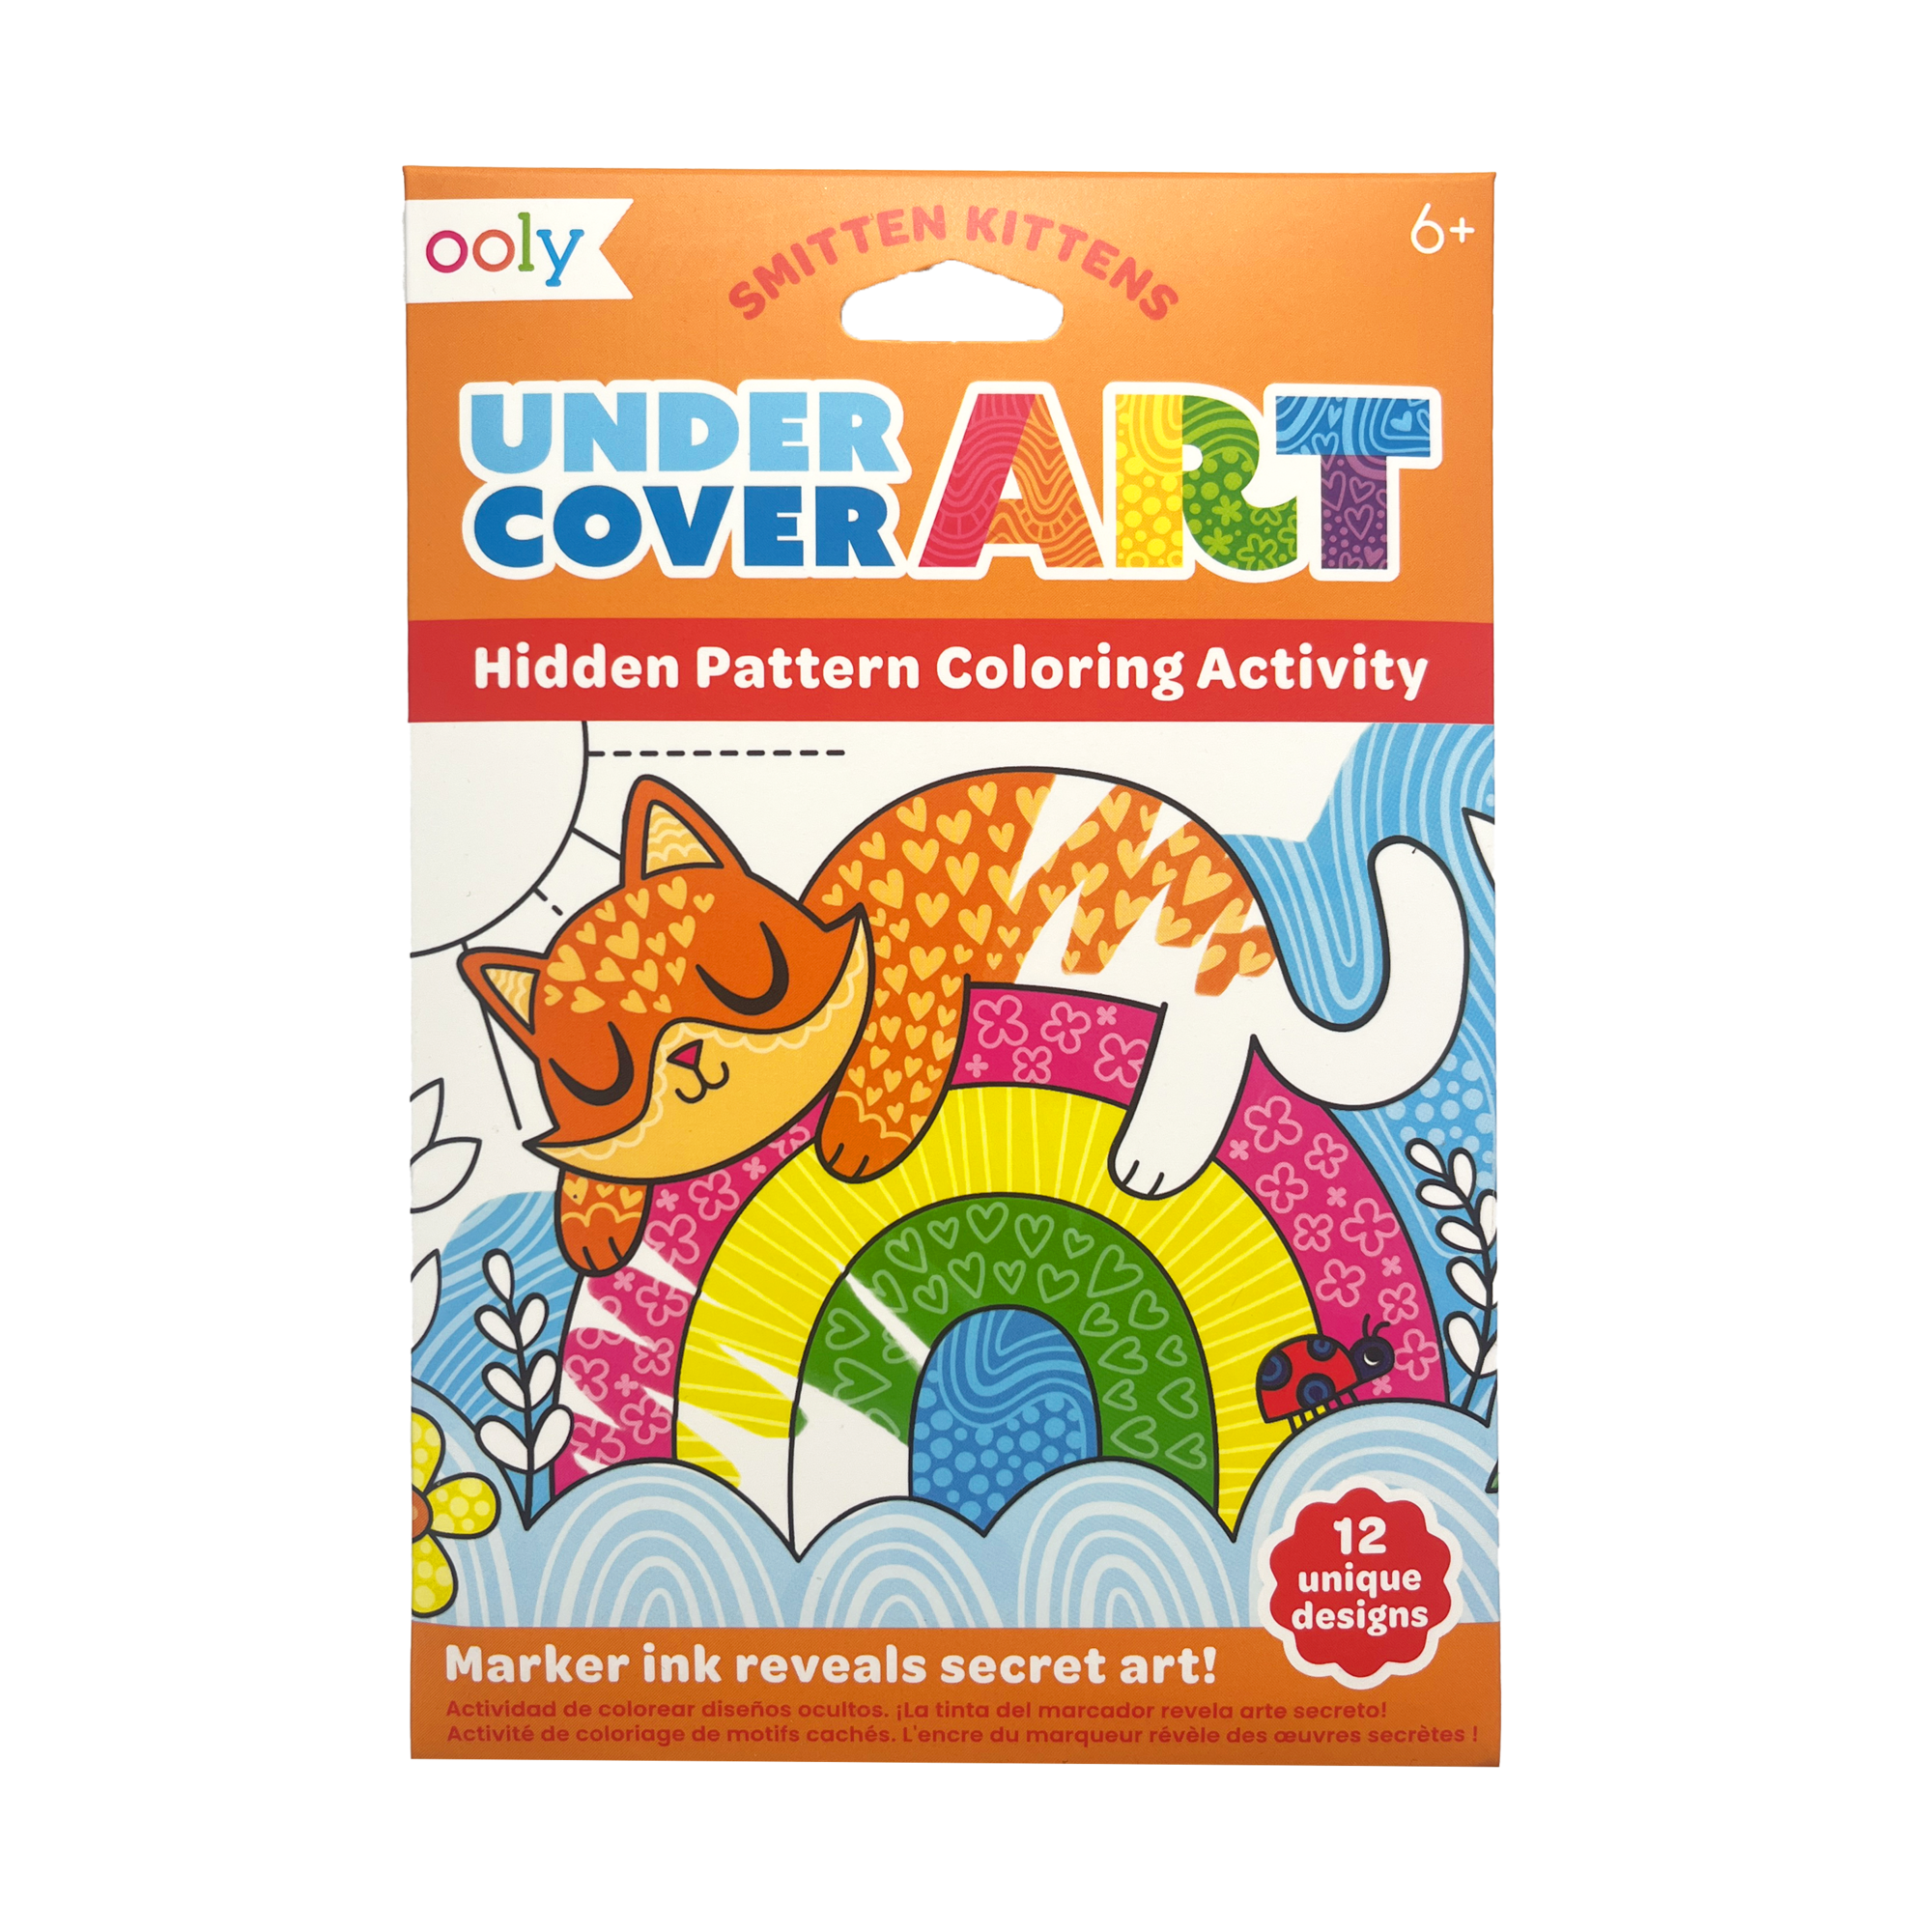 OOLYUndercover Art Hidden Pattern Coloring Activity Art Cards - Smitten Kittens front of packaging